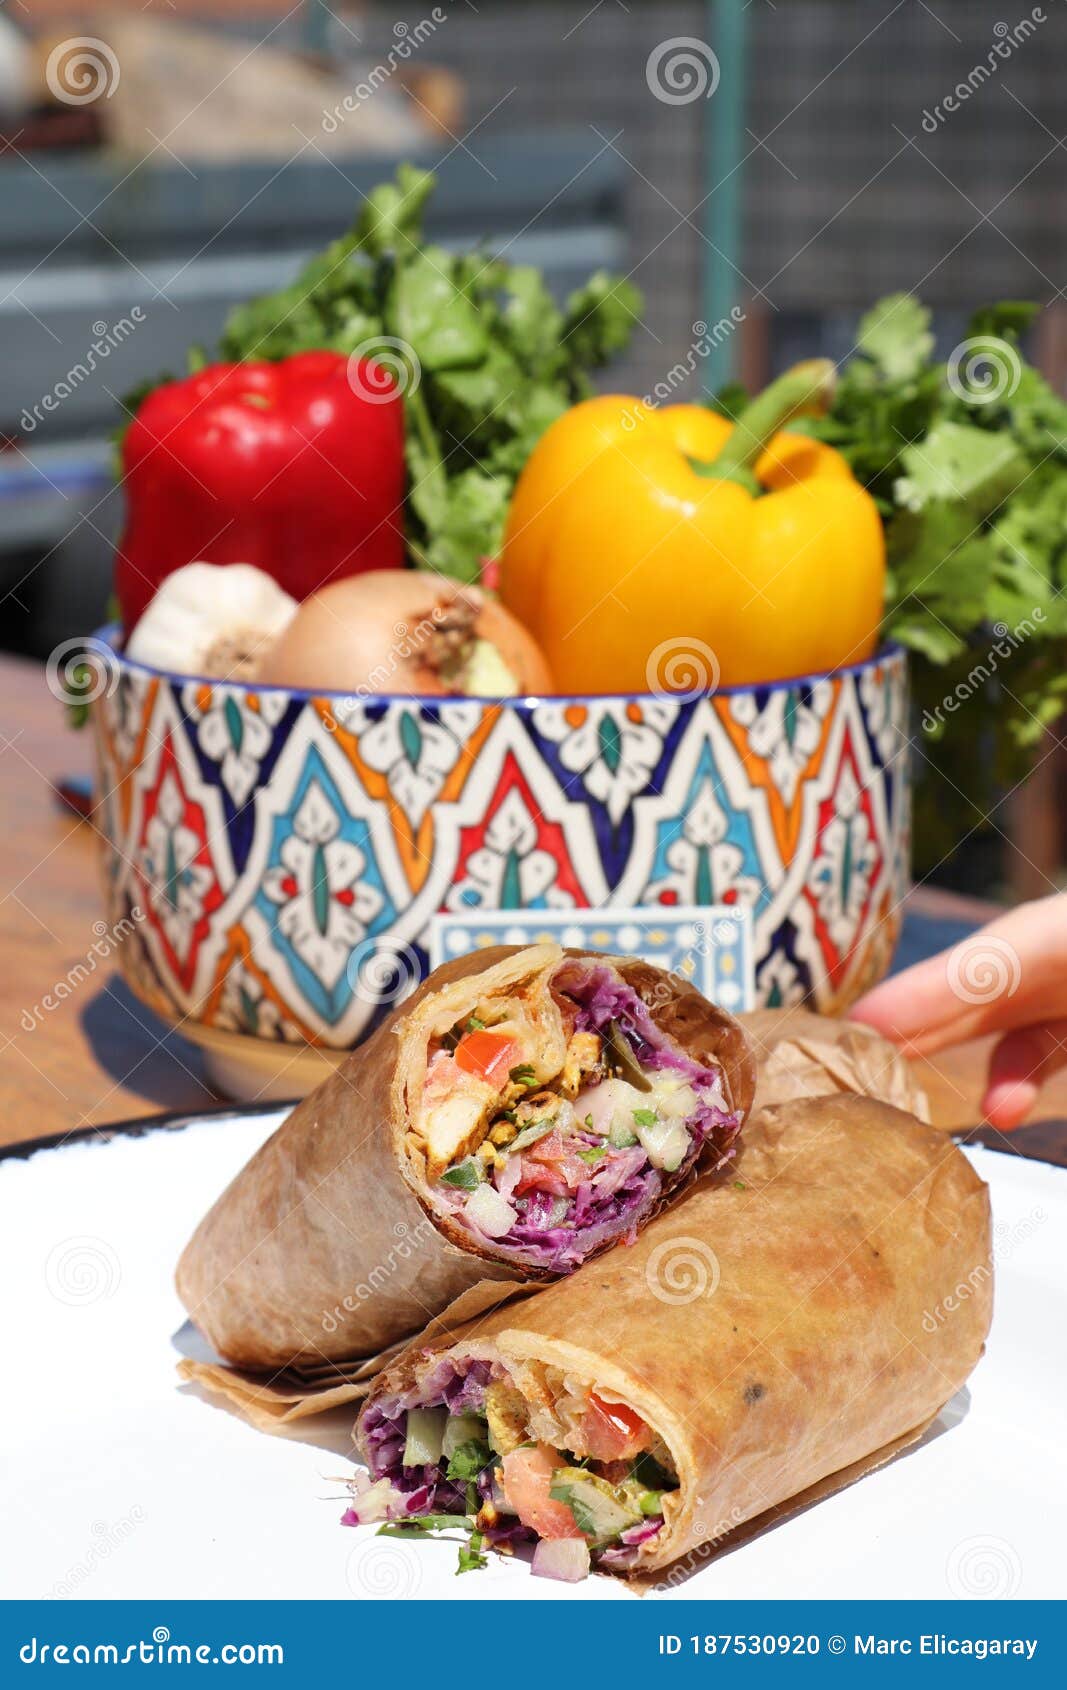 Mediterranean Cuisine with Humus and Shakshouka Stock Photo - Image of